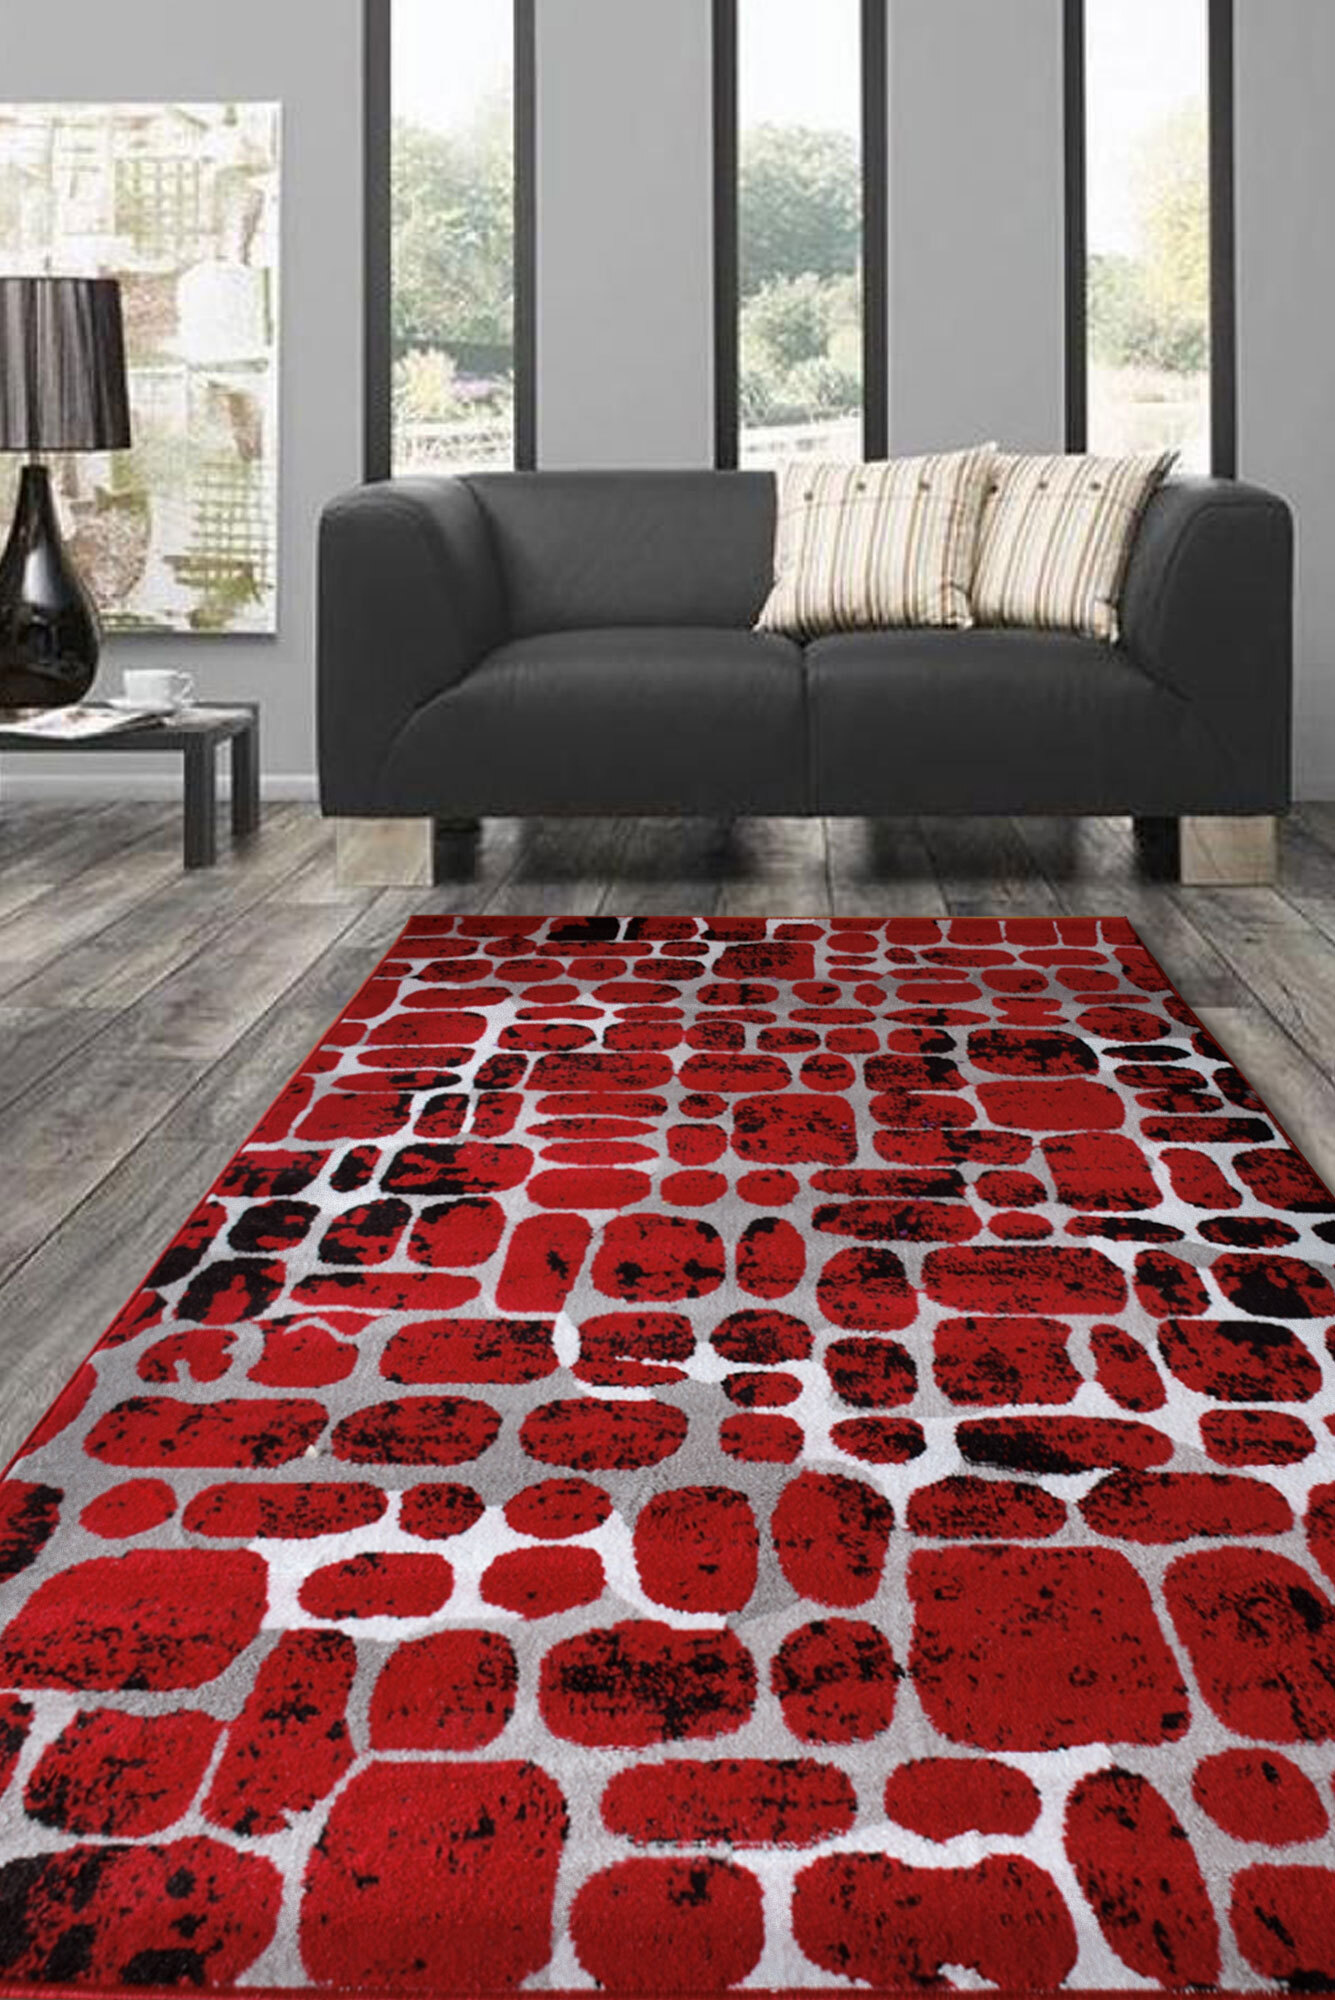 Atlanta Modern Red Abstract Rug(Size 230 x 67cm) RUNNER